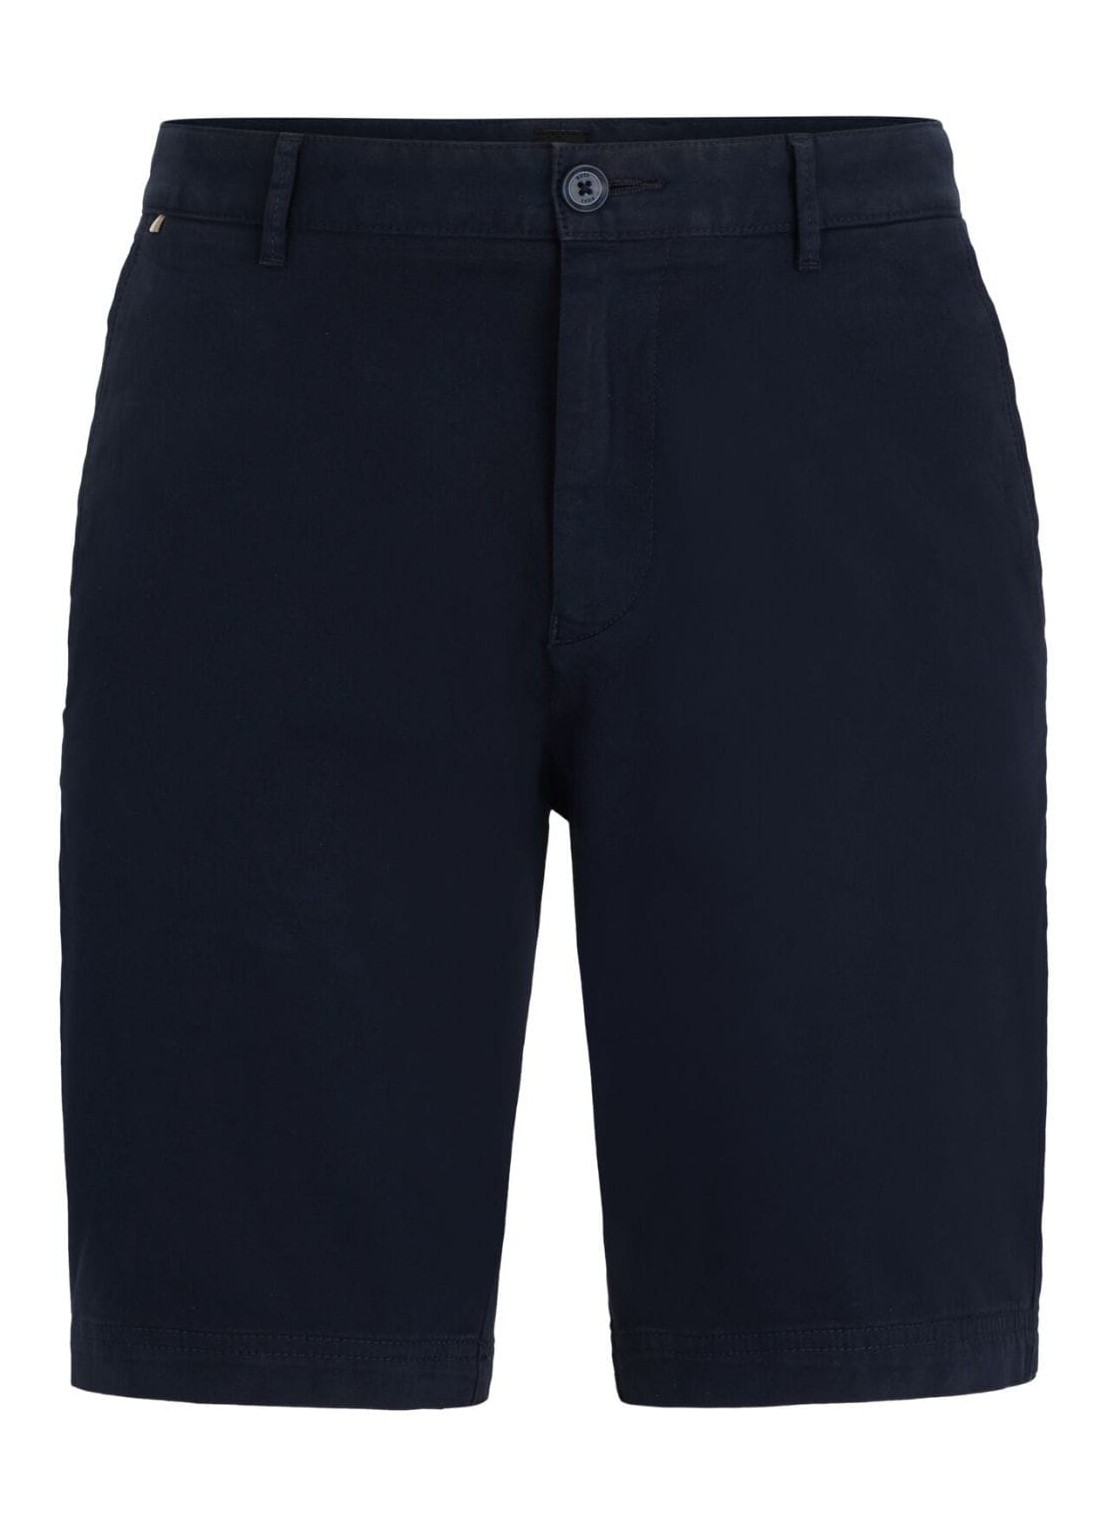 Pantalon corto boss short pant manslice-short - 50512524 404 talla 48
 